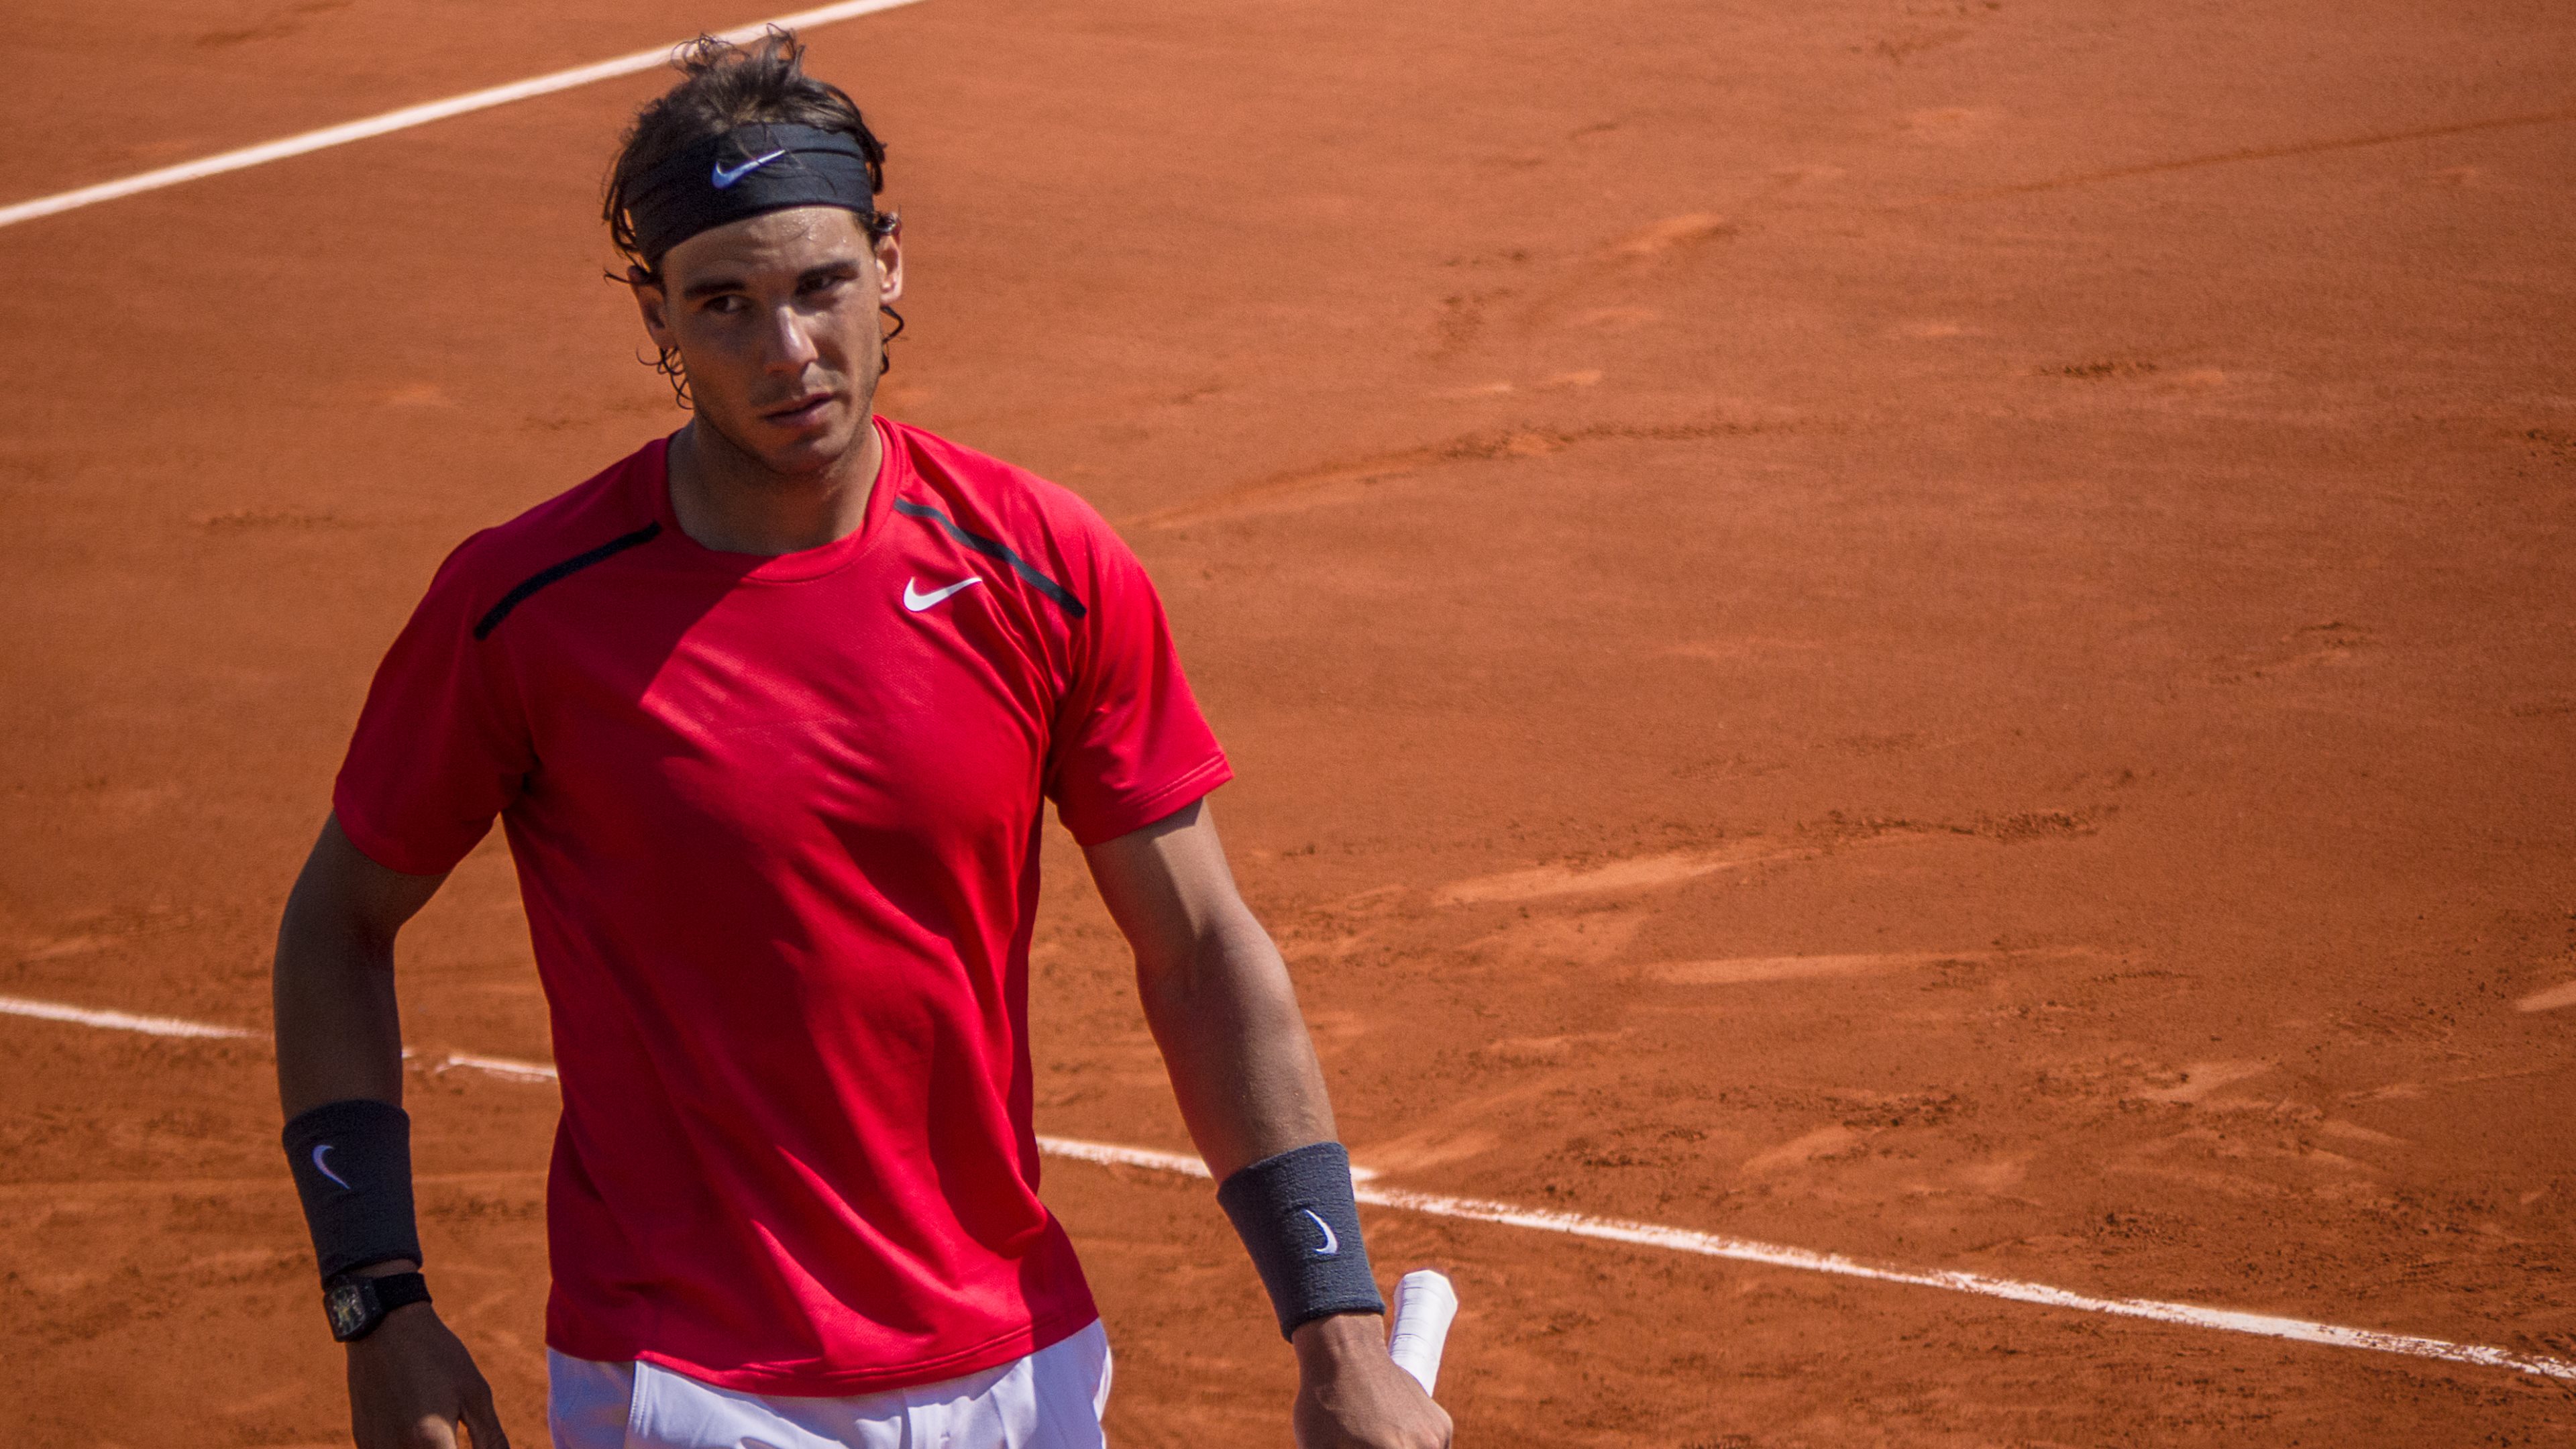 Is Rafa Nadal done for good?